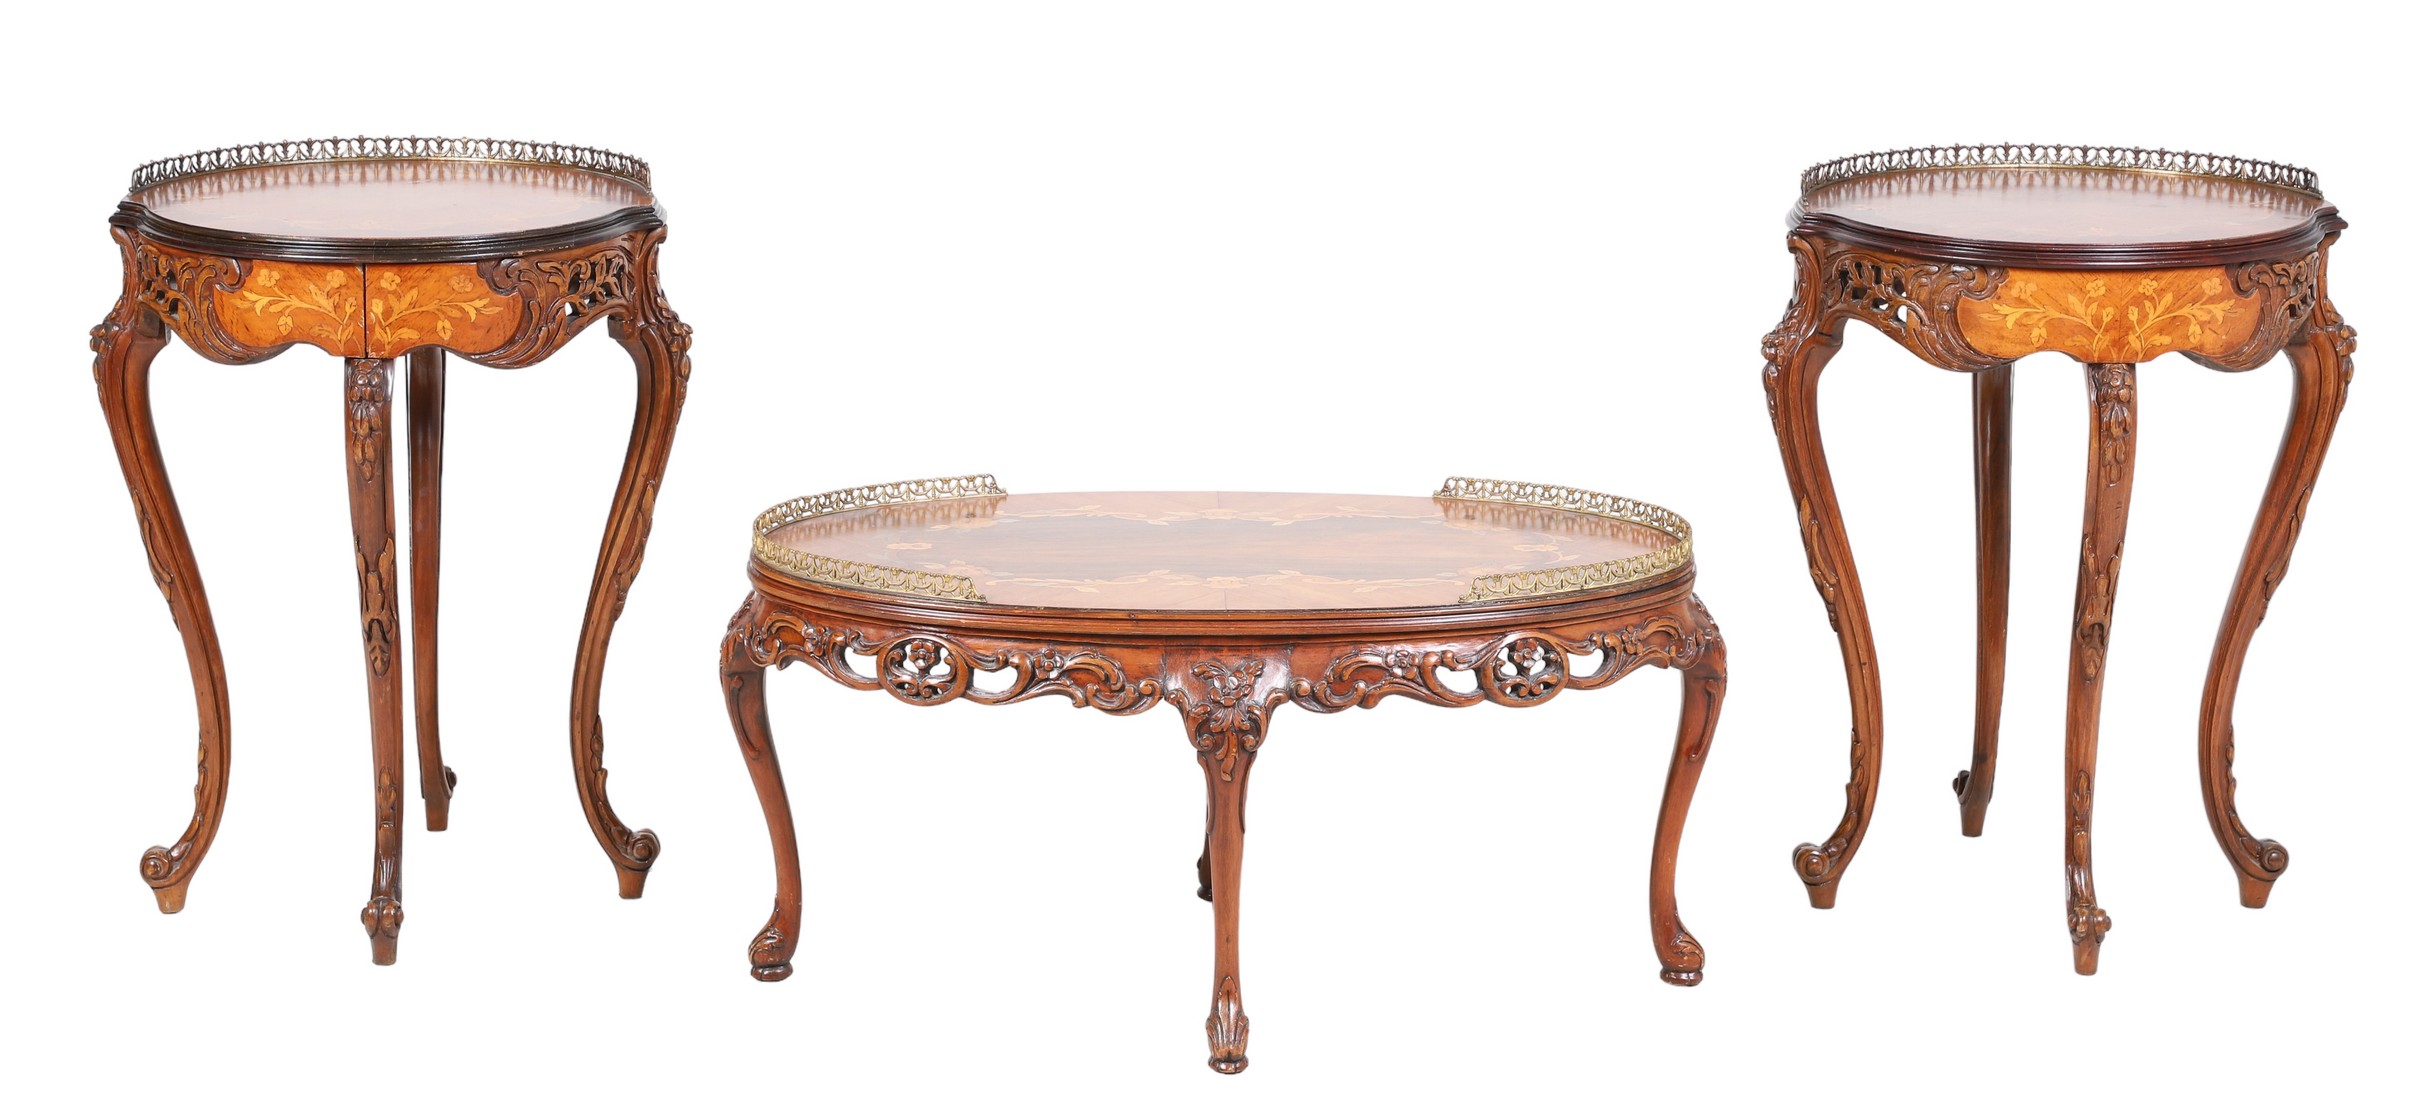  3 pc Louis XV style inlaid table 2e0b29